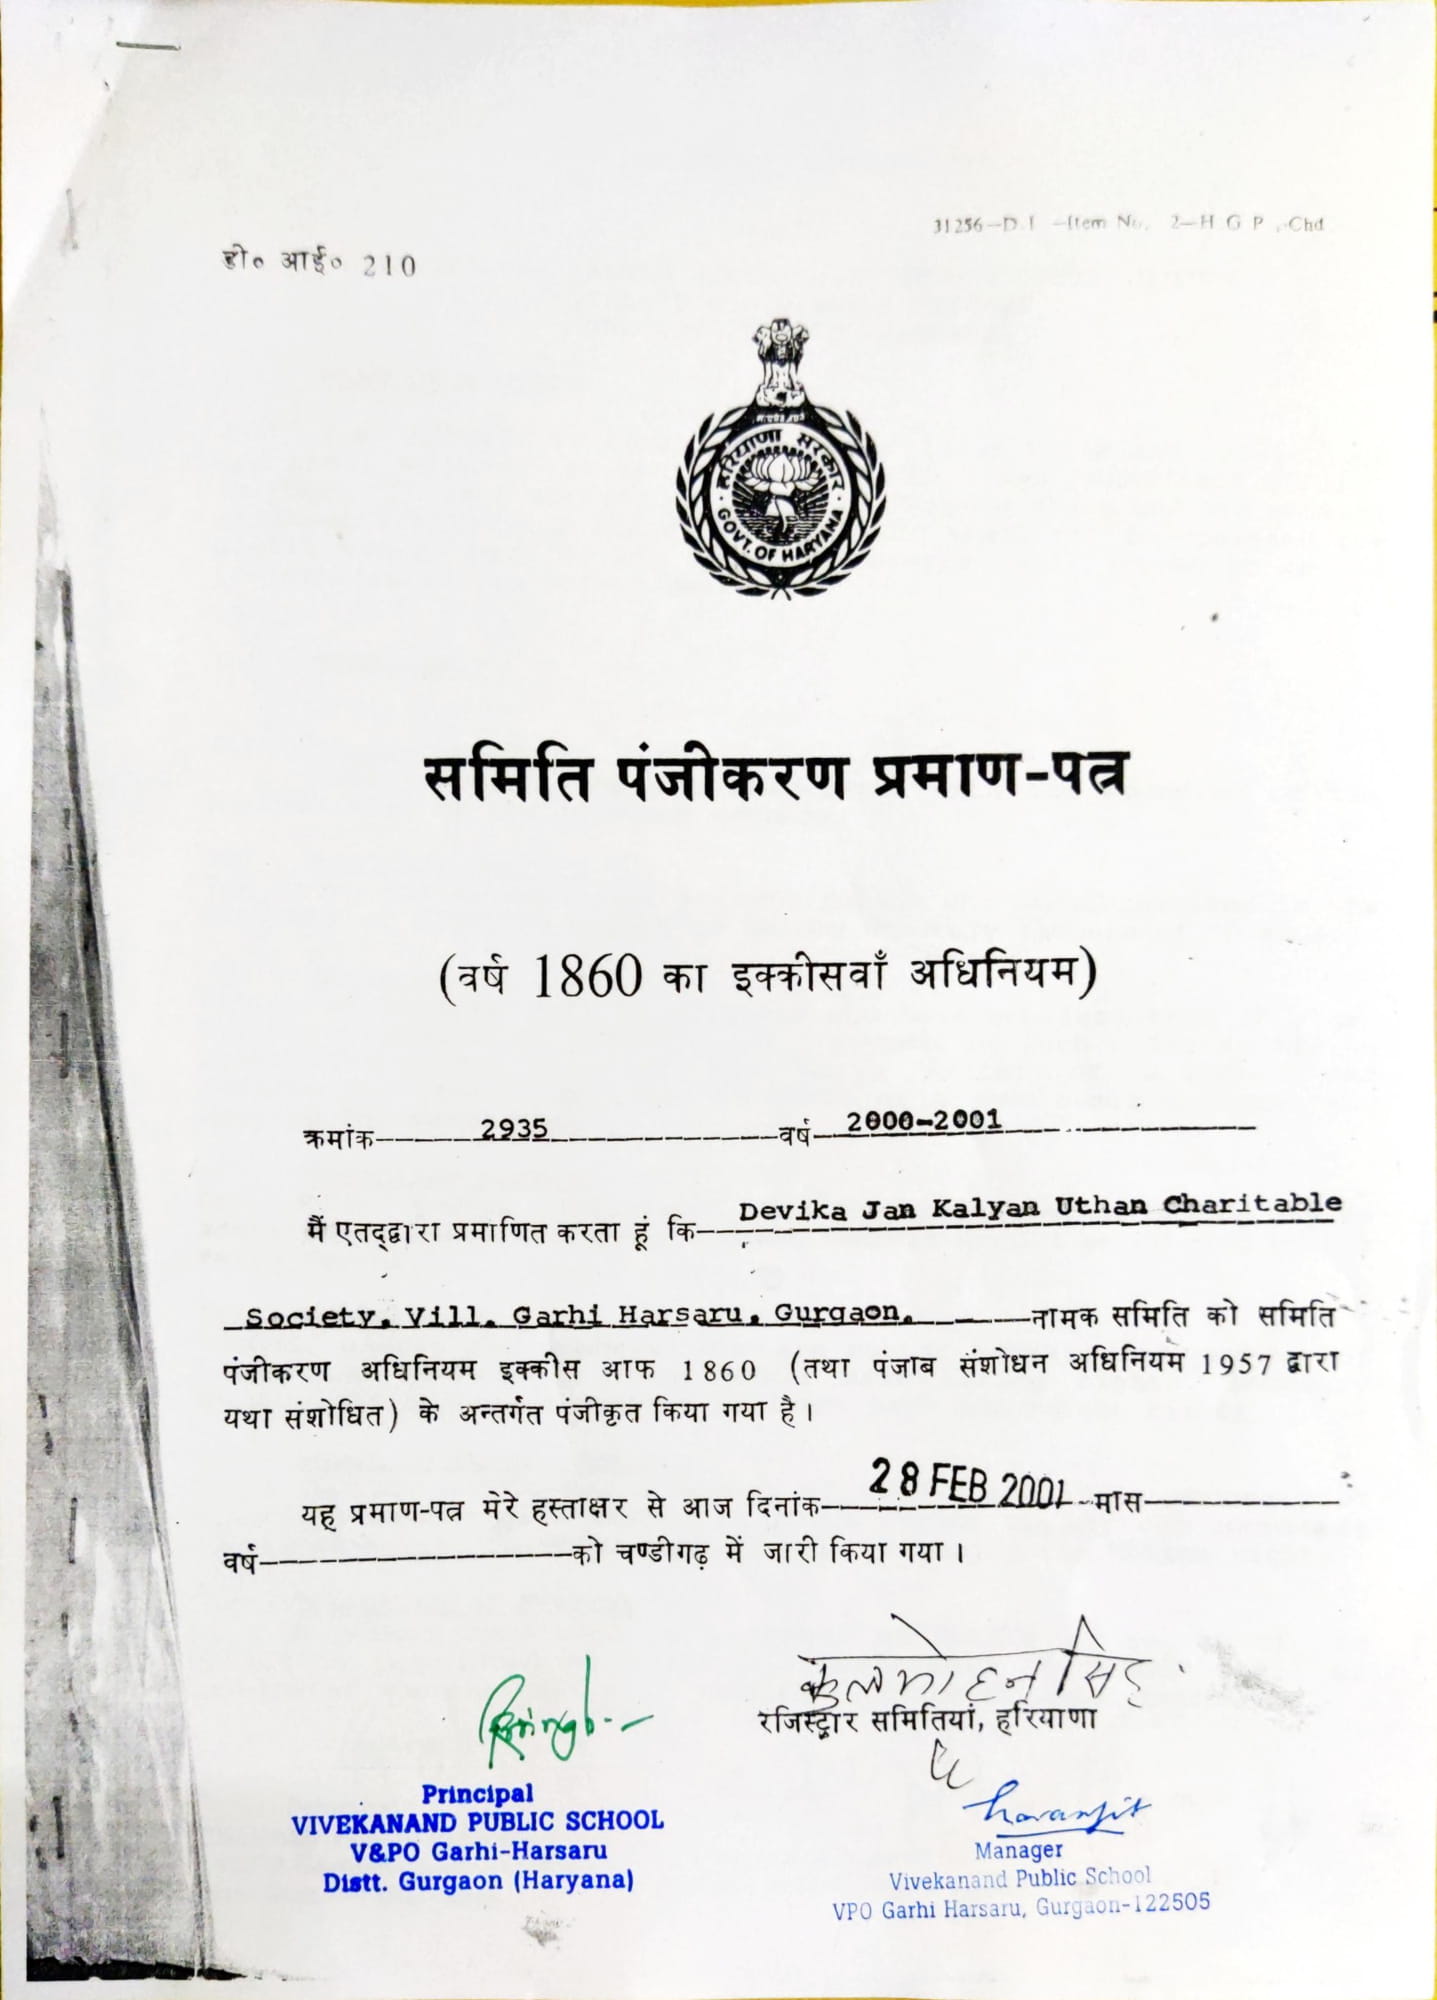 Vivekanand Public School Society Registration Certificate